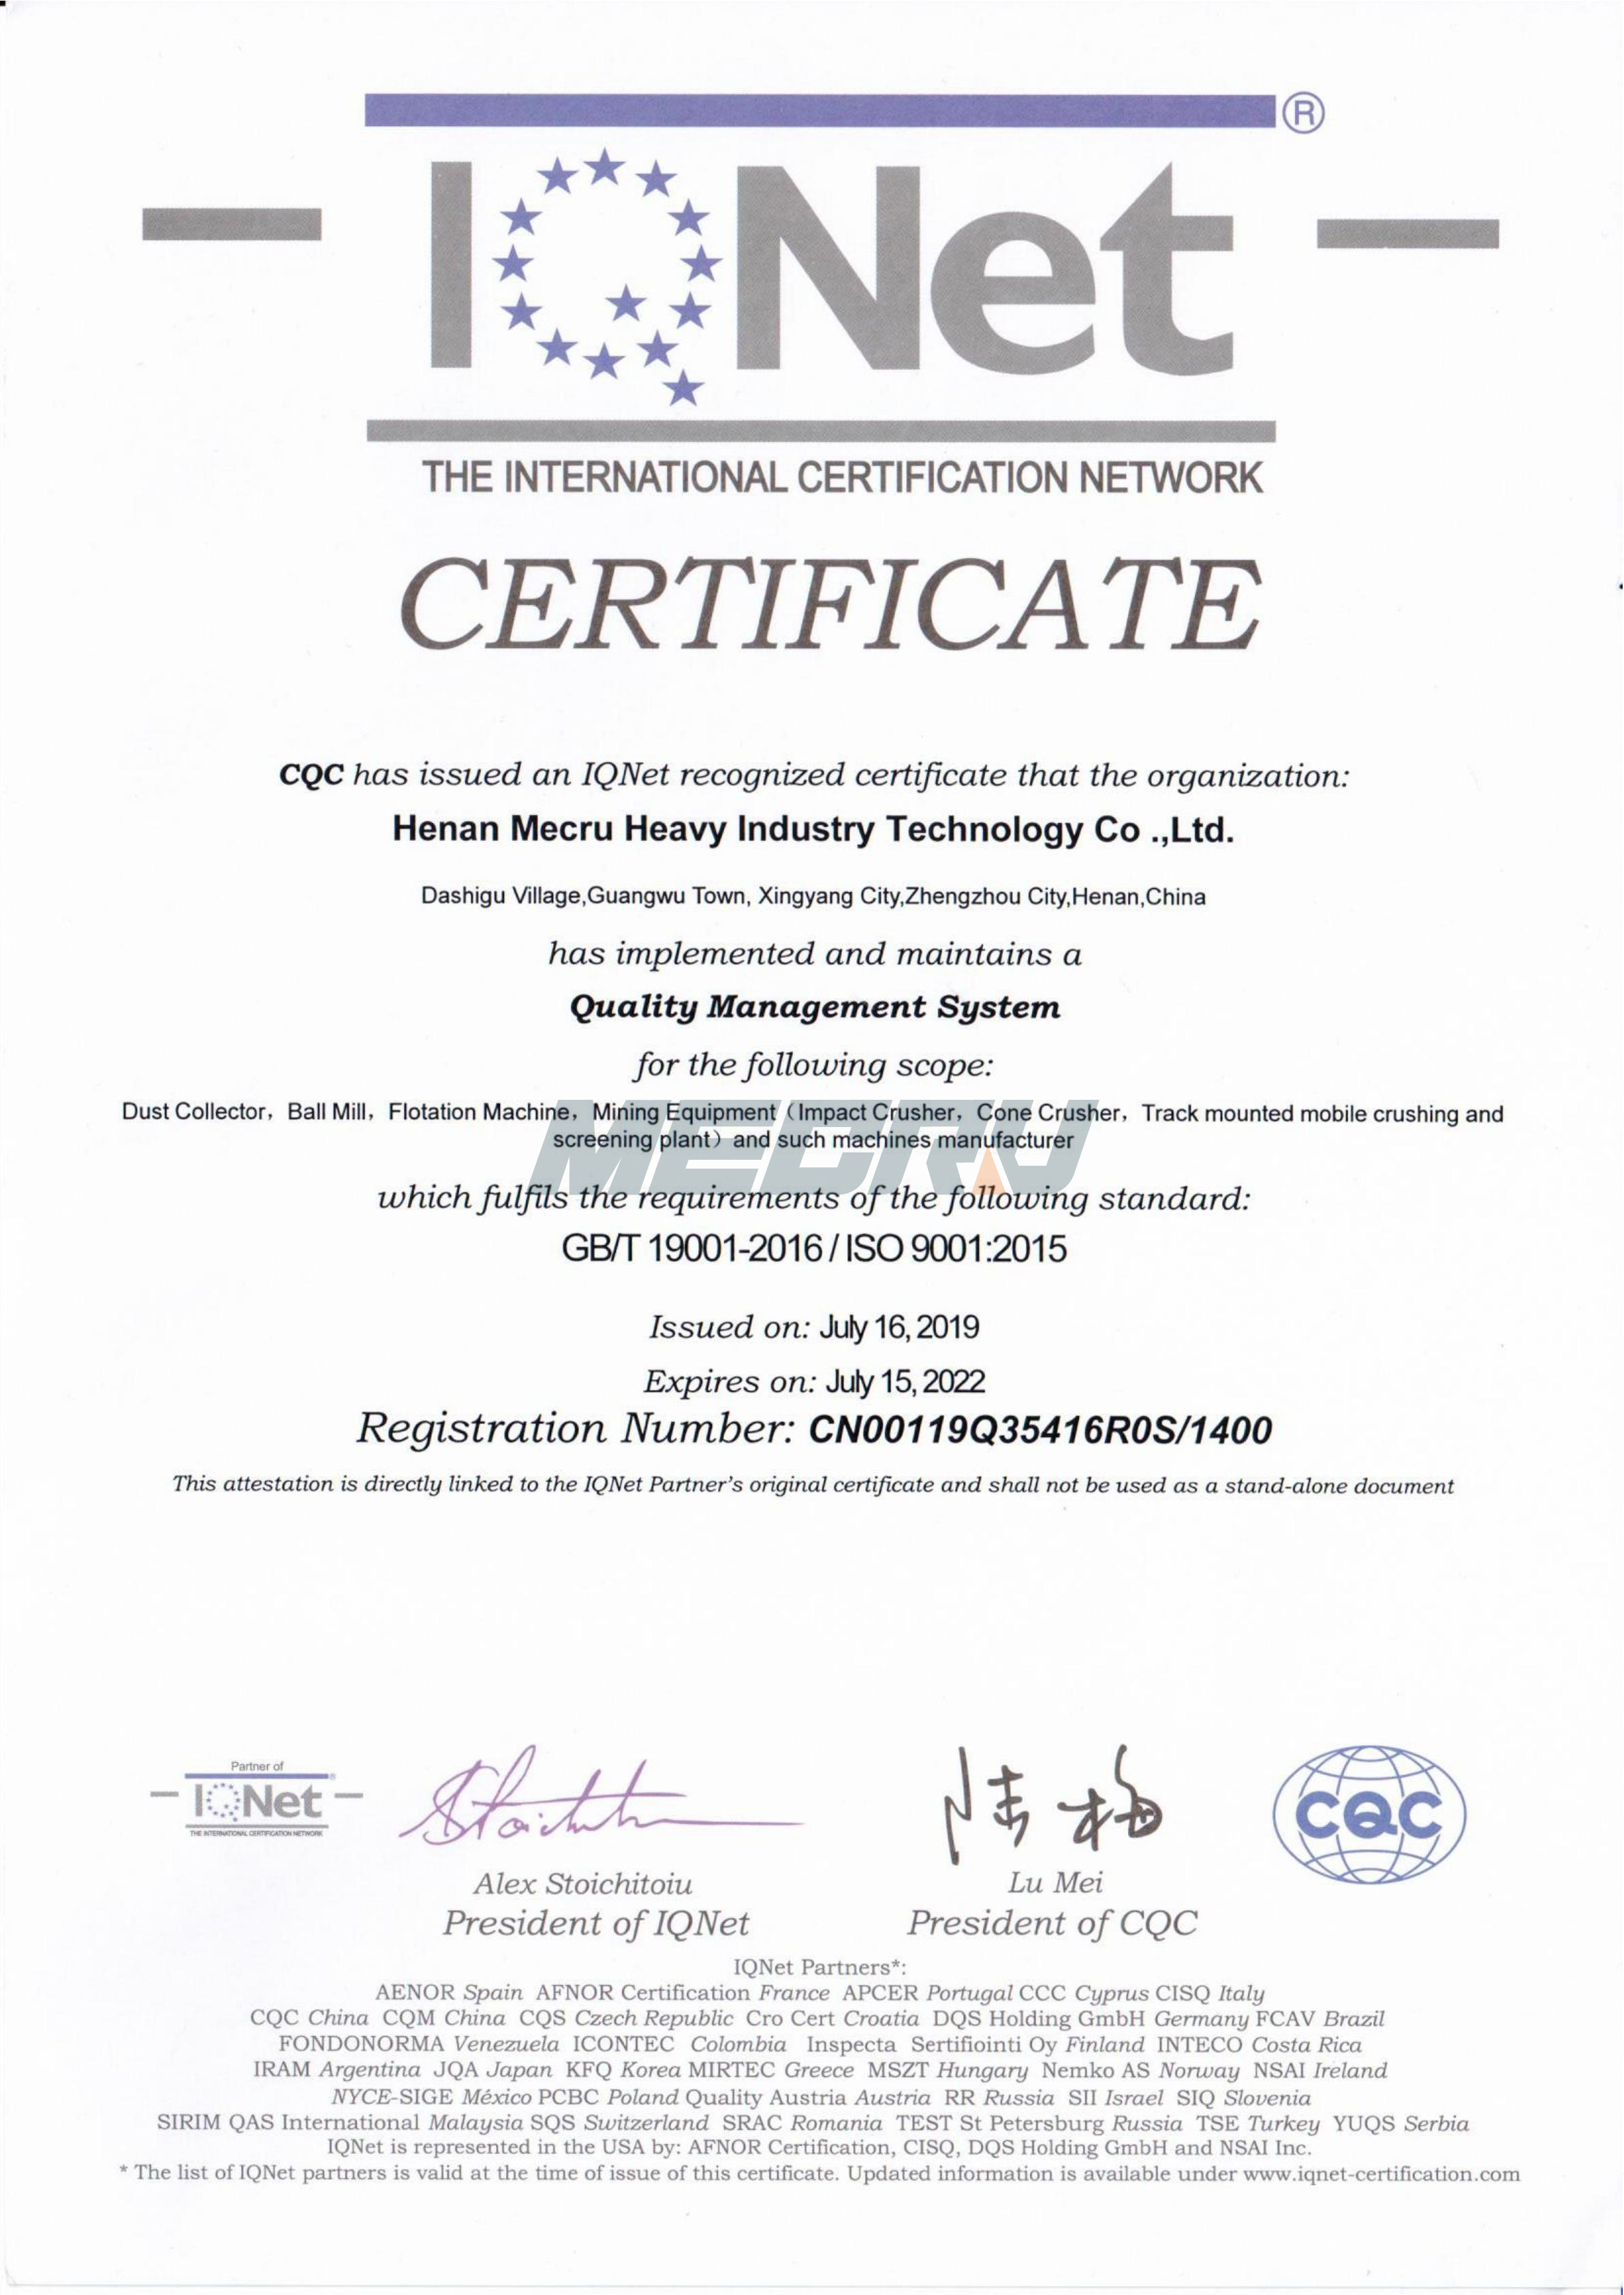 IQNet Association—The International Certification Network